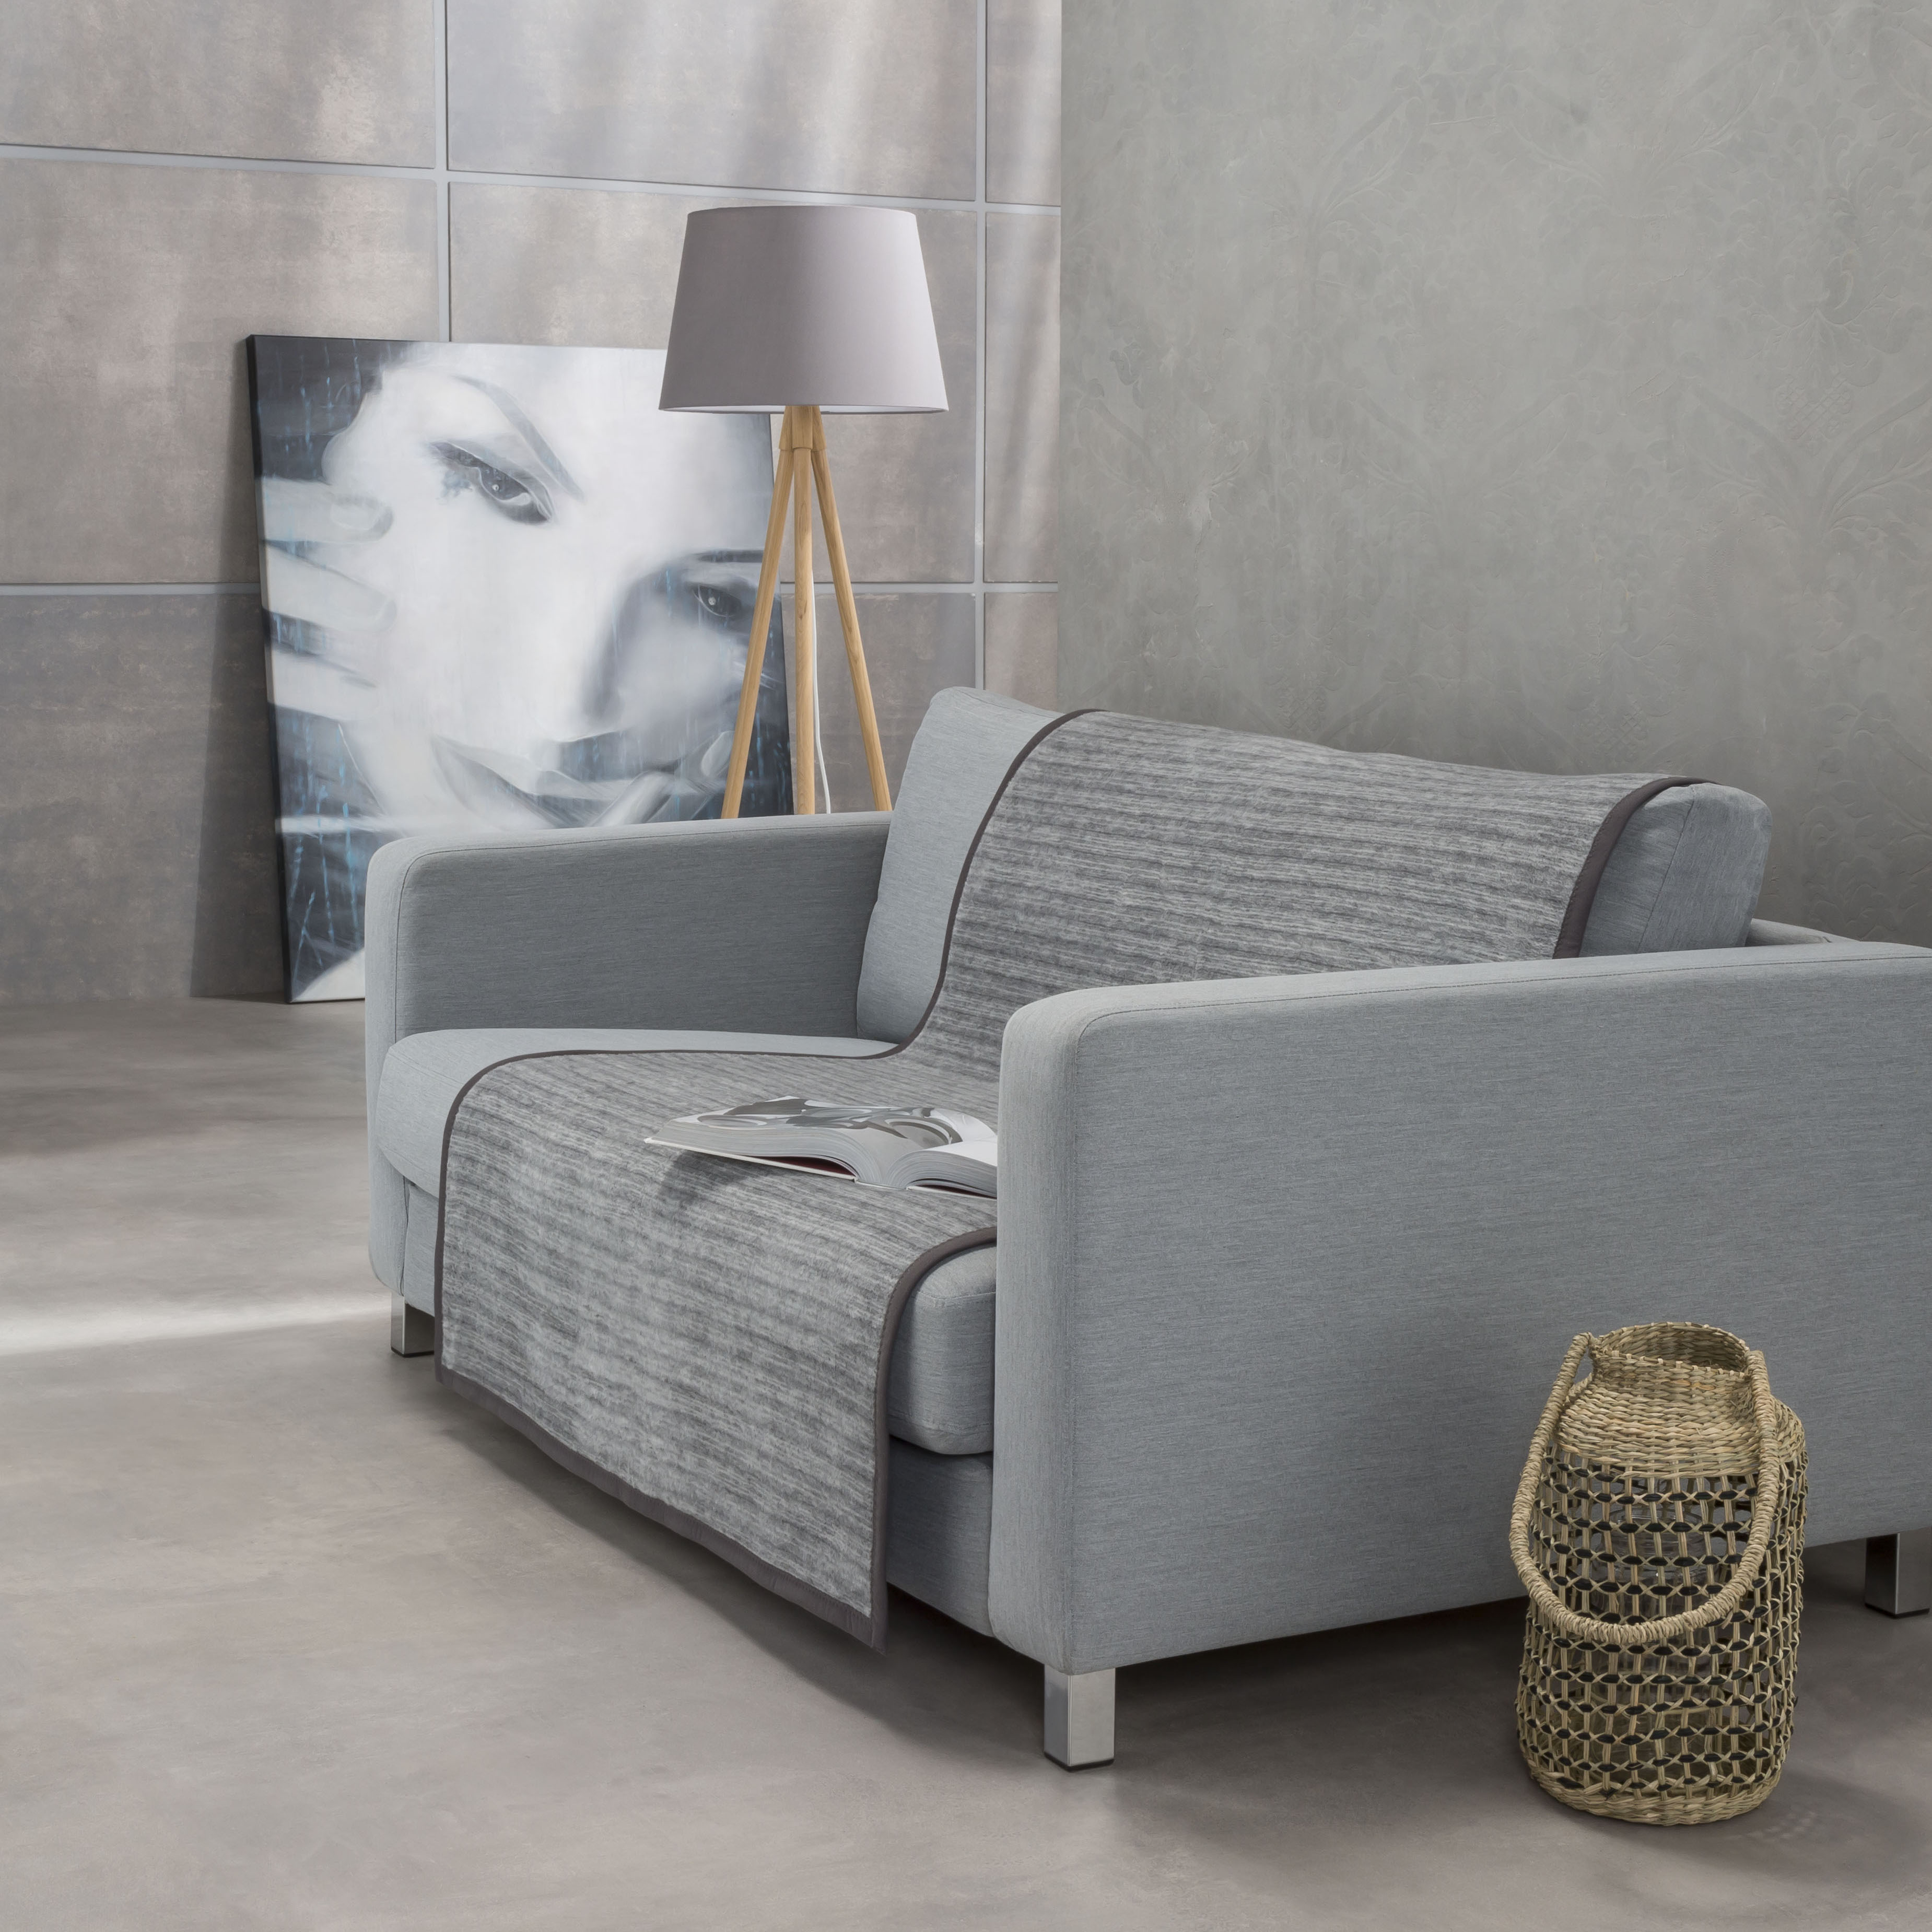 Kopie von Ibena - Uni 6 Sofa - Farben Decke Shop Blanket - The | - Fano vers. Couchdecken.de